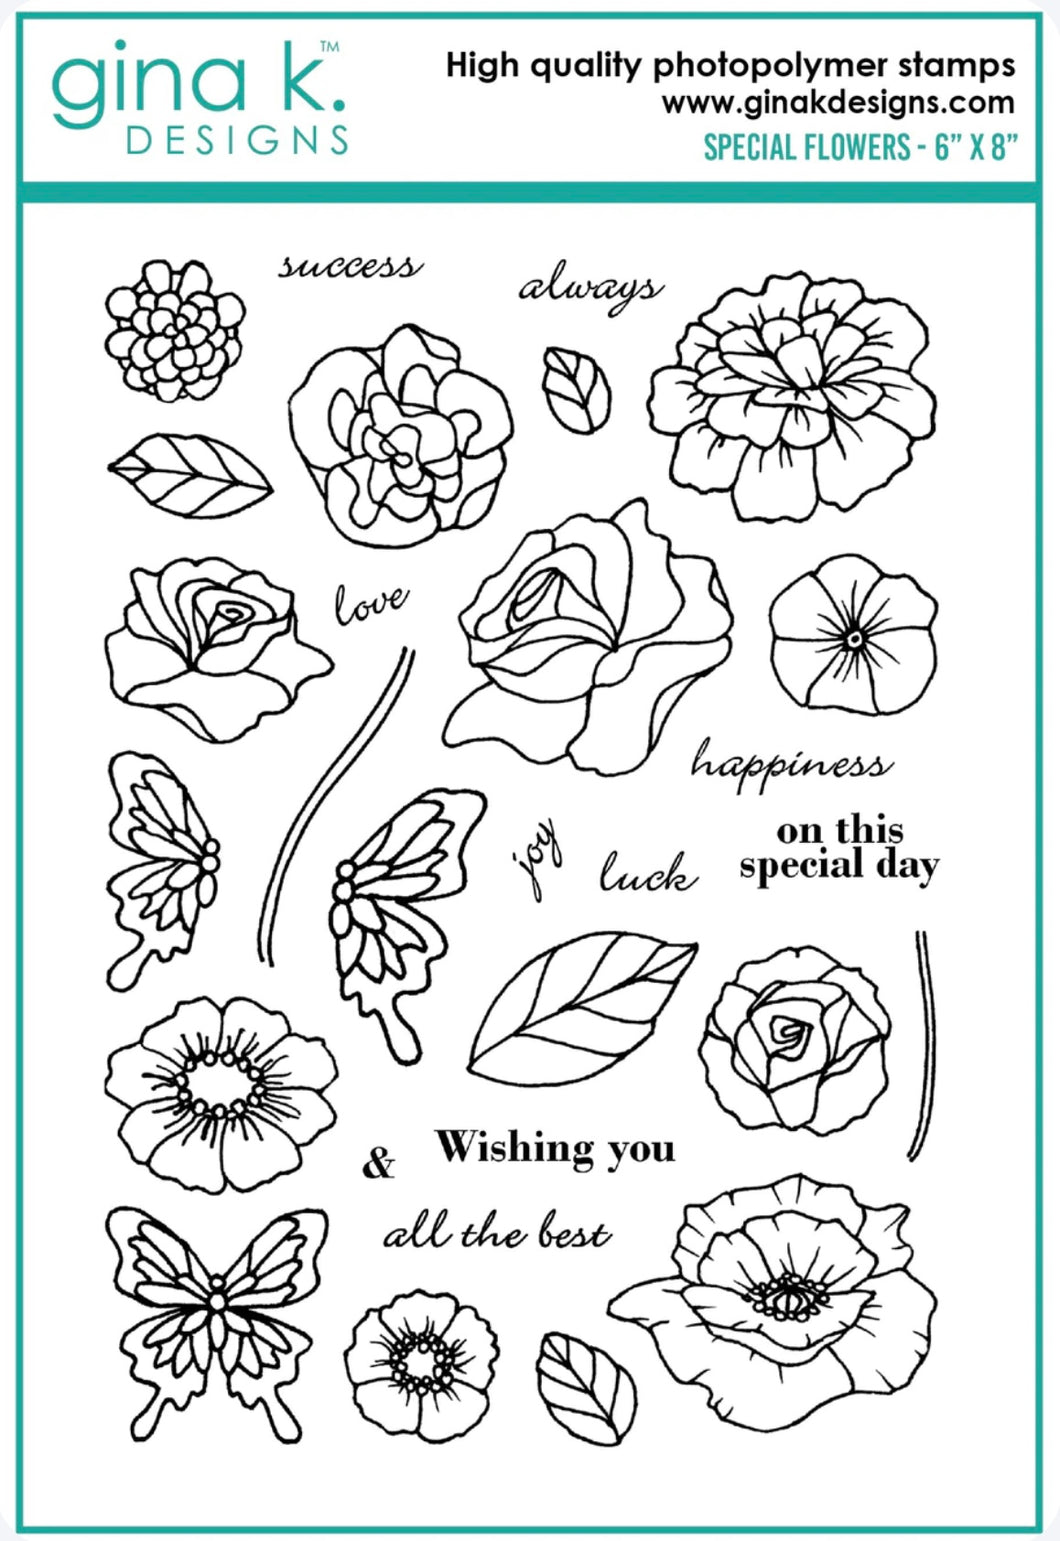 Gina K Designs - Special Flowers Stamp Set